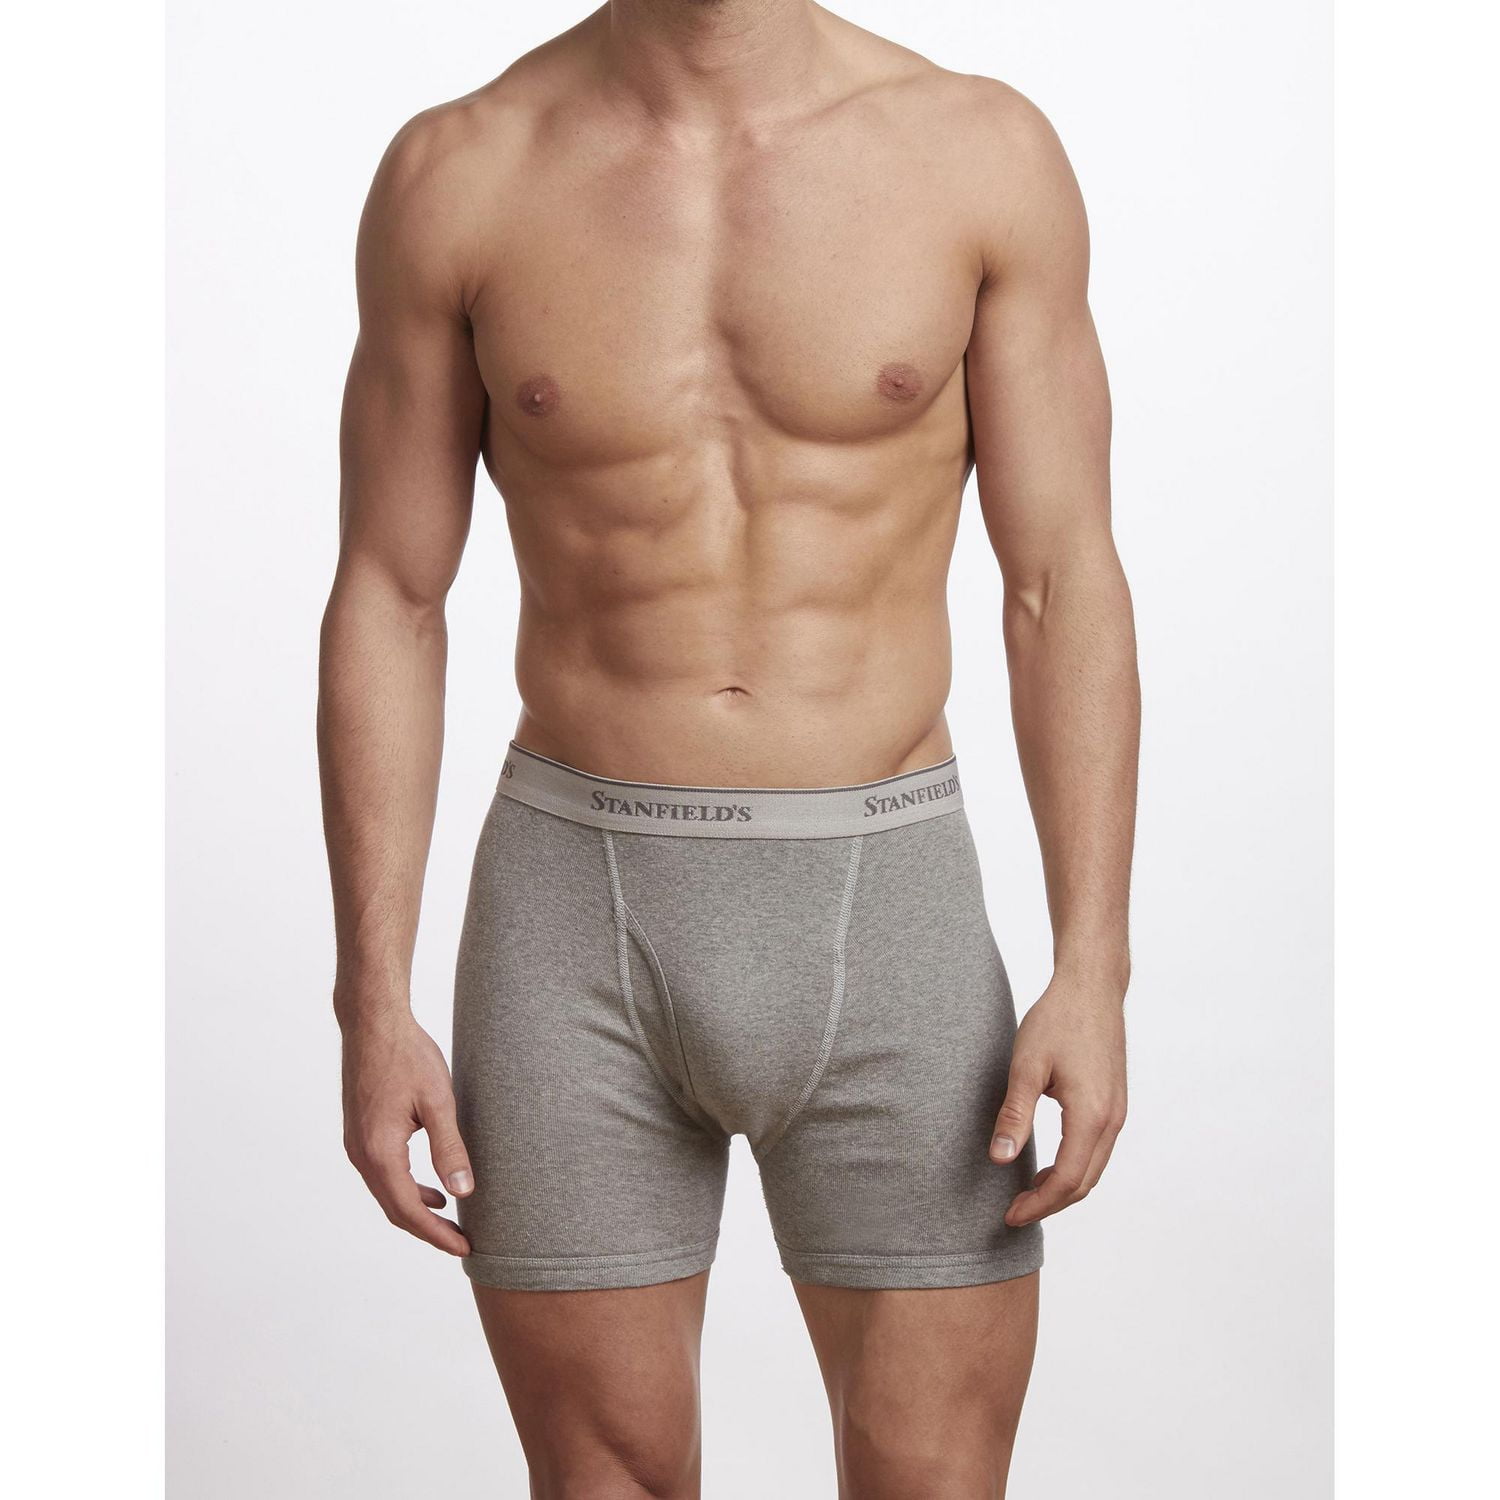 Og Boxer Brief 2 Pack, Men's Underwear